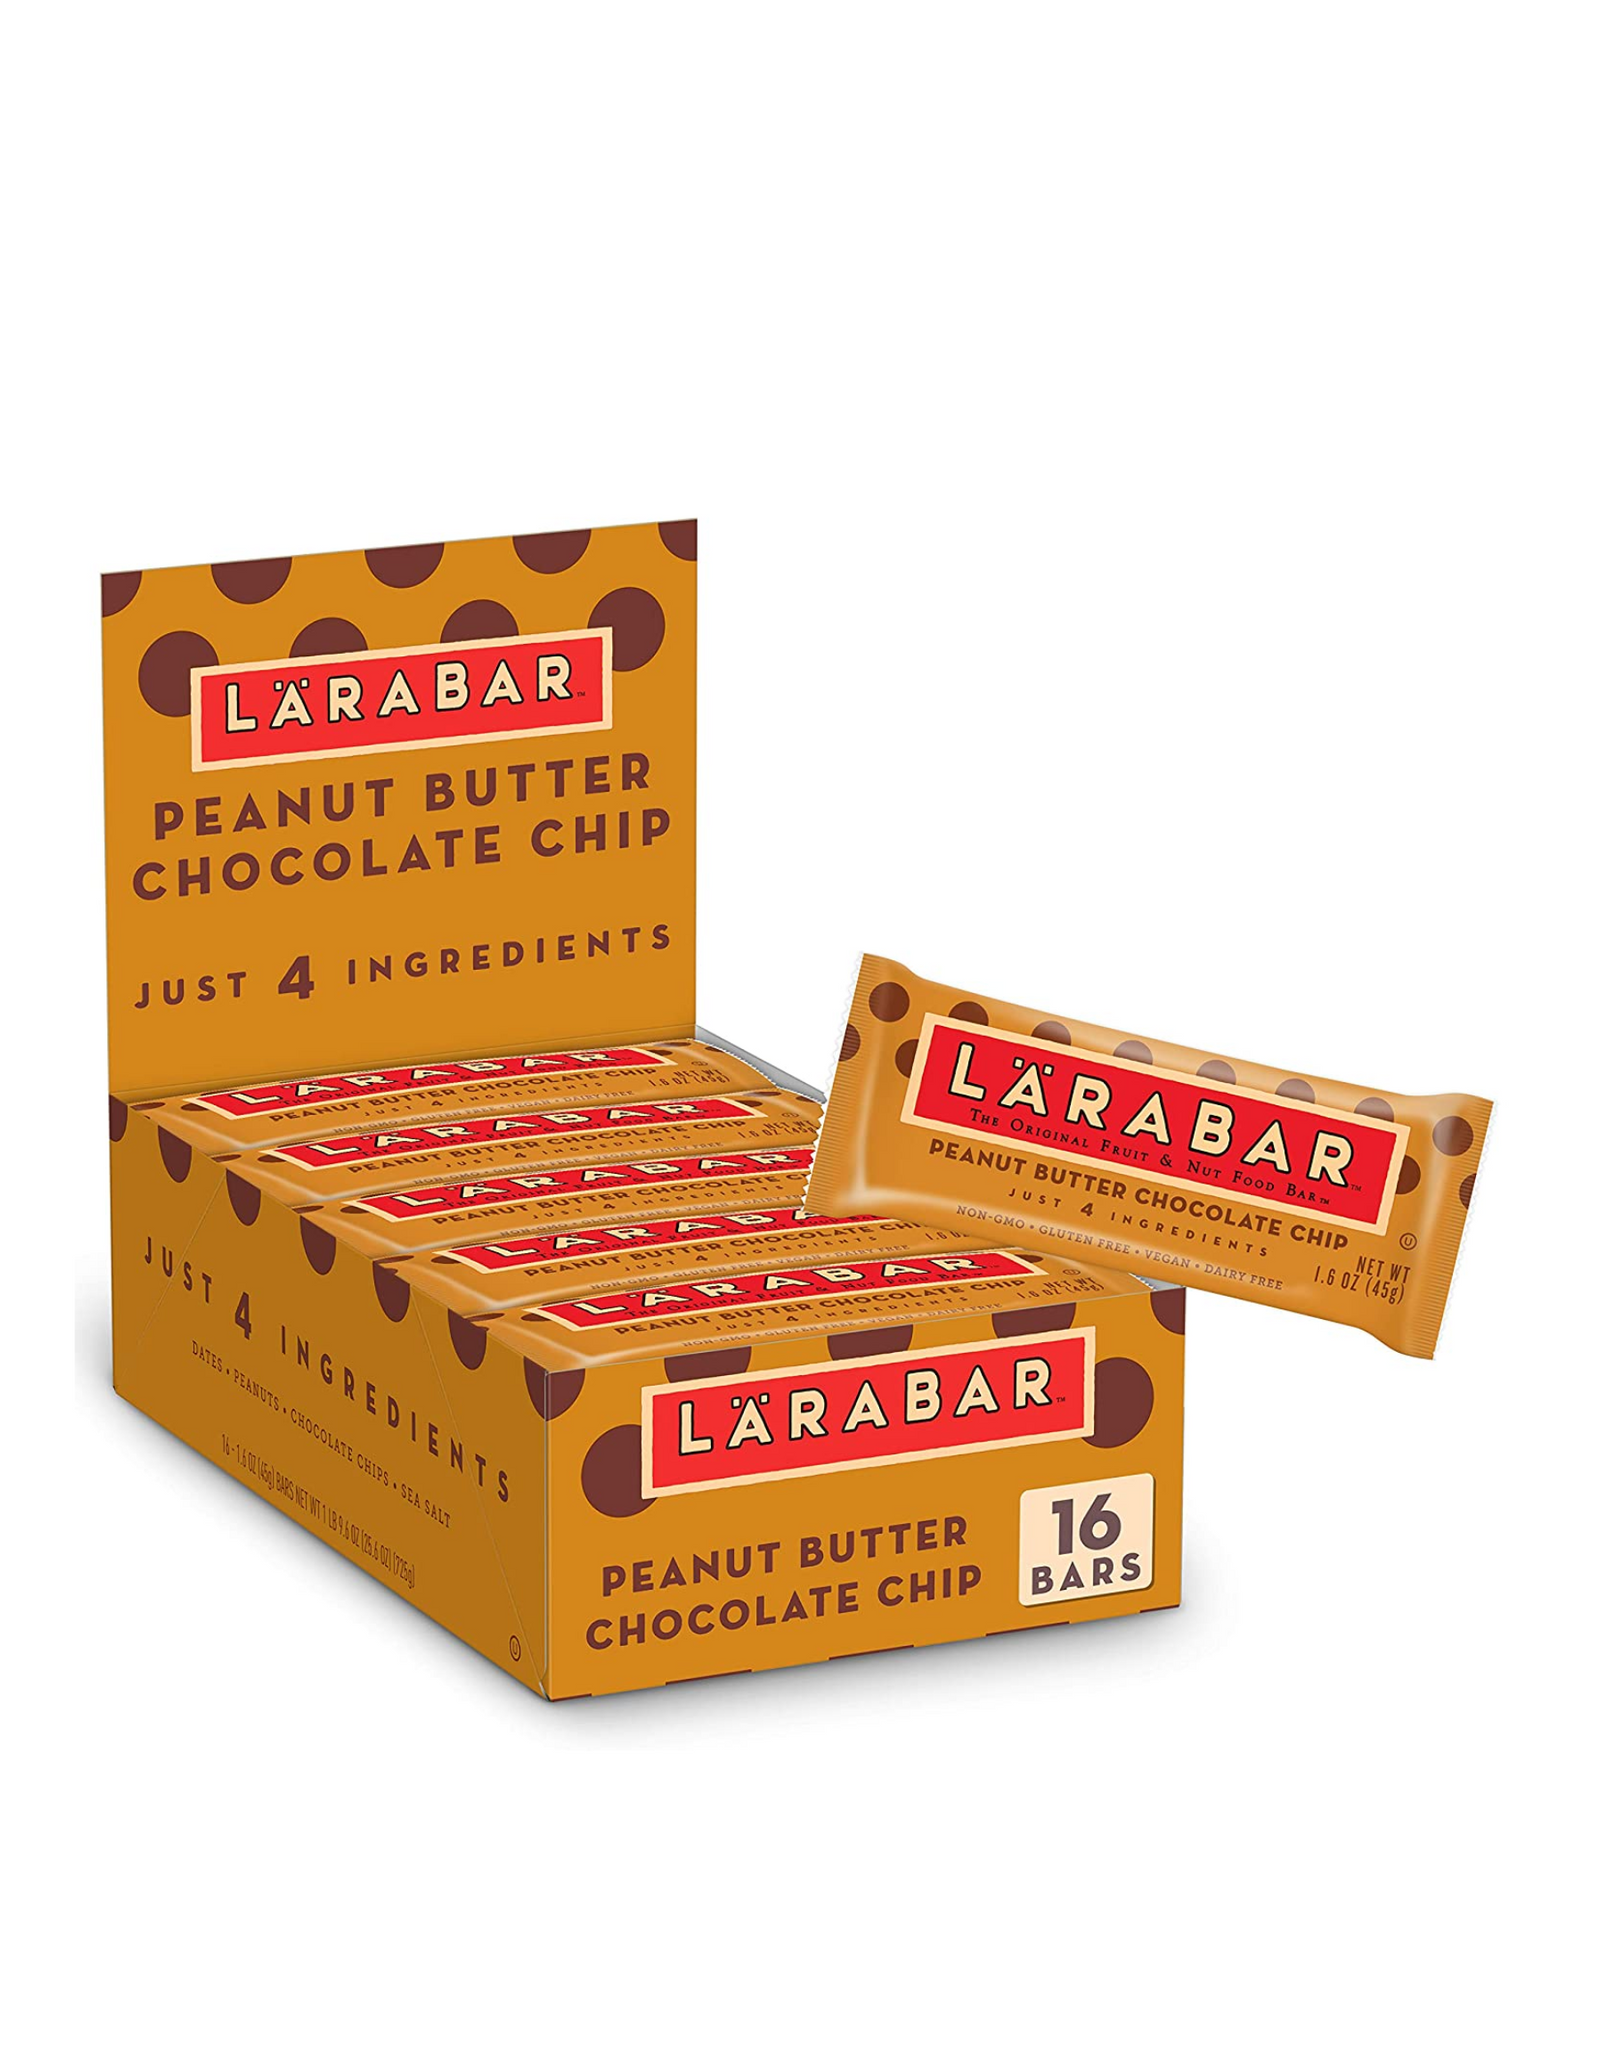 Larabar Peanut Butter Chocolate Chip, Gluten Free Fruit & Nut Bars, 1.6 oz each, 16 ct